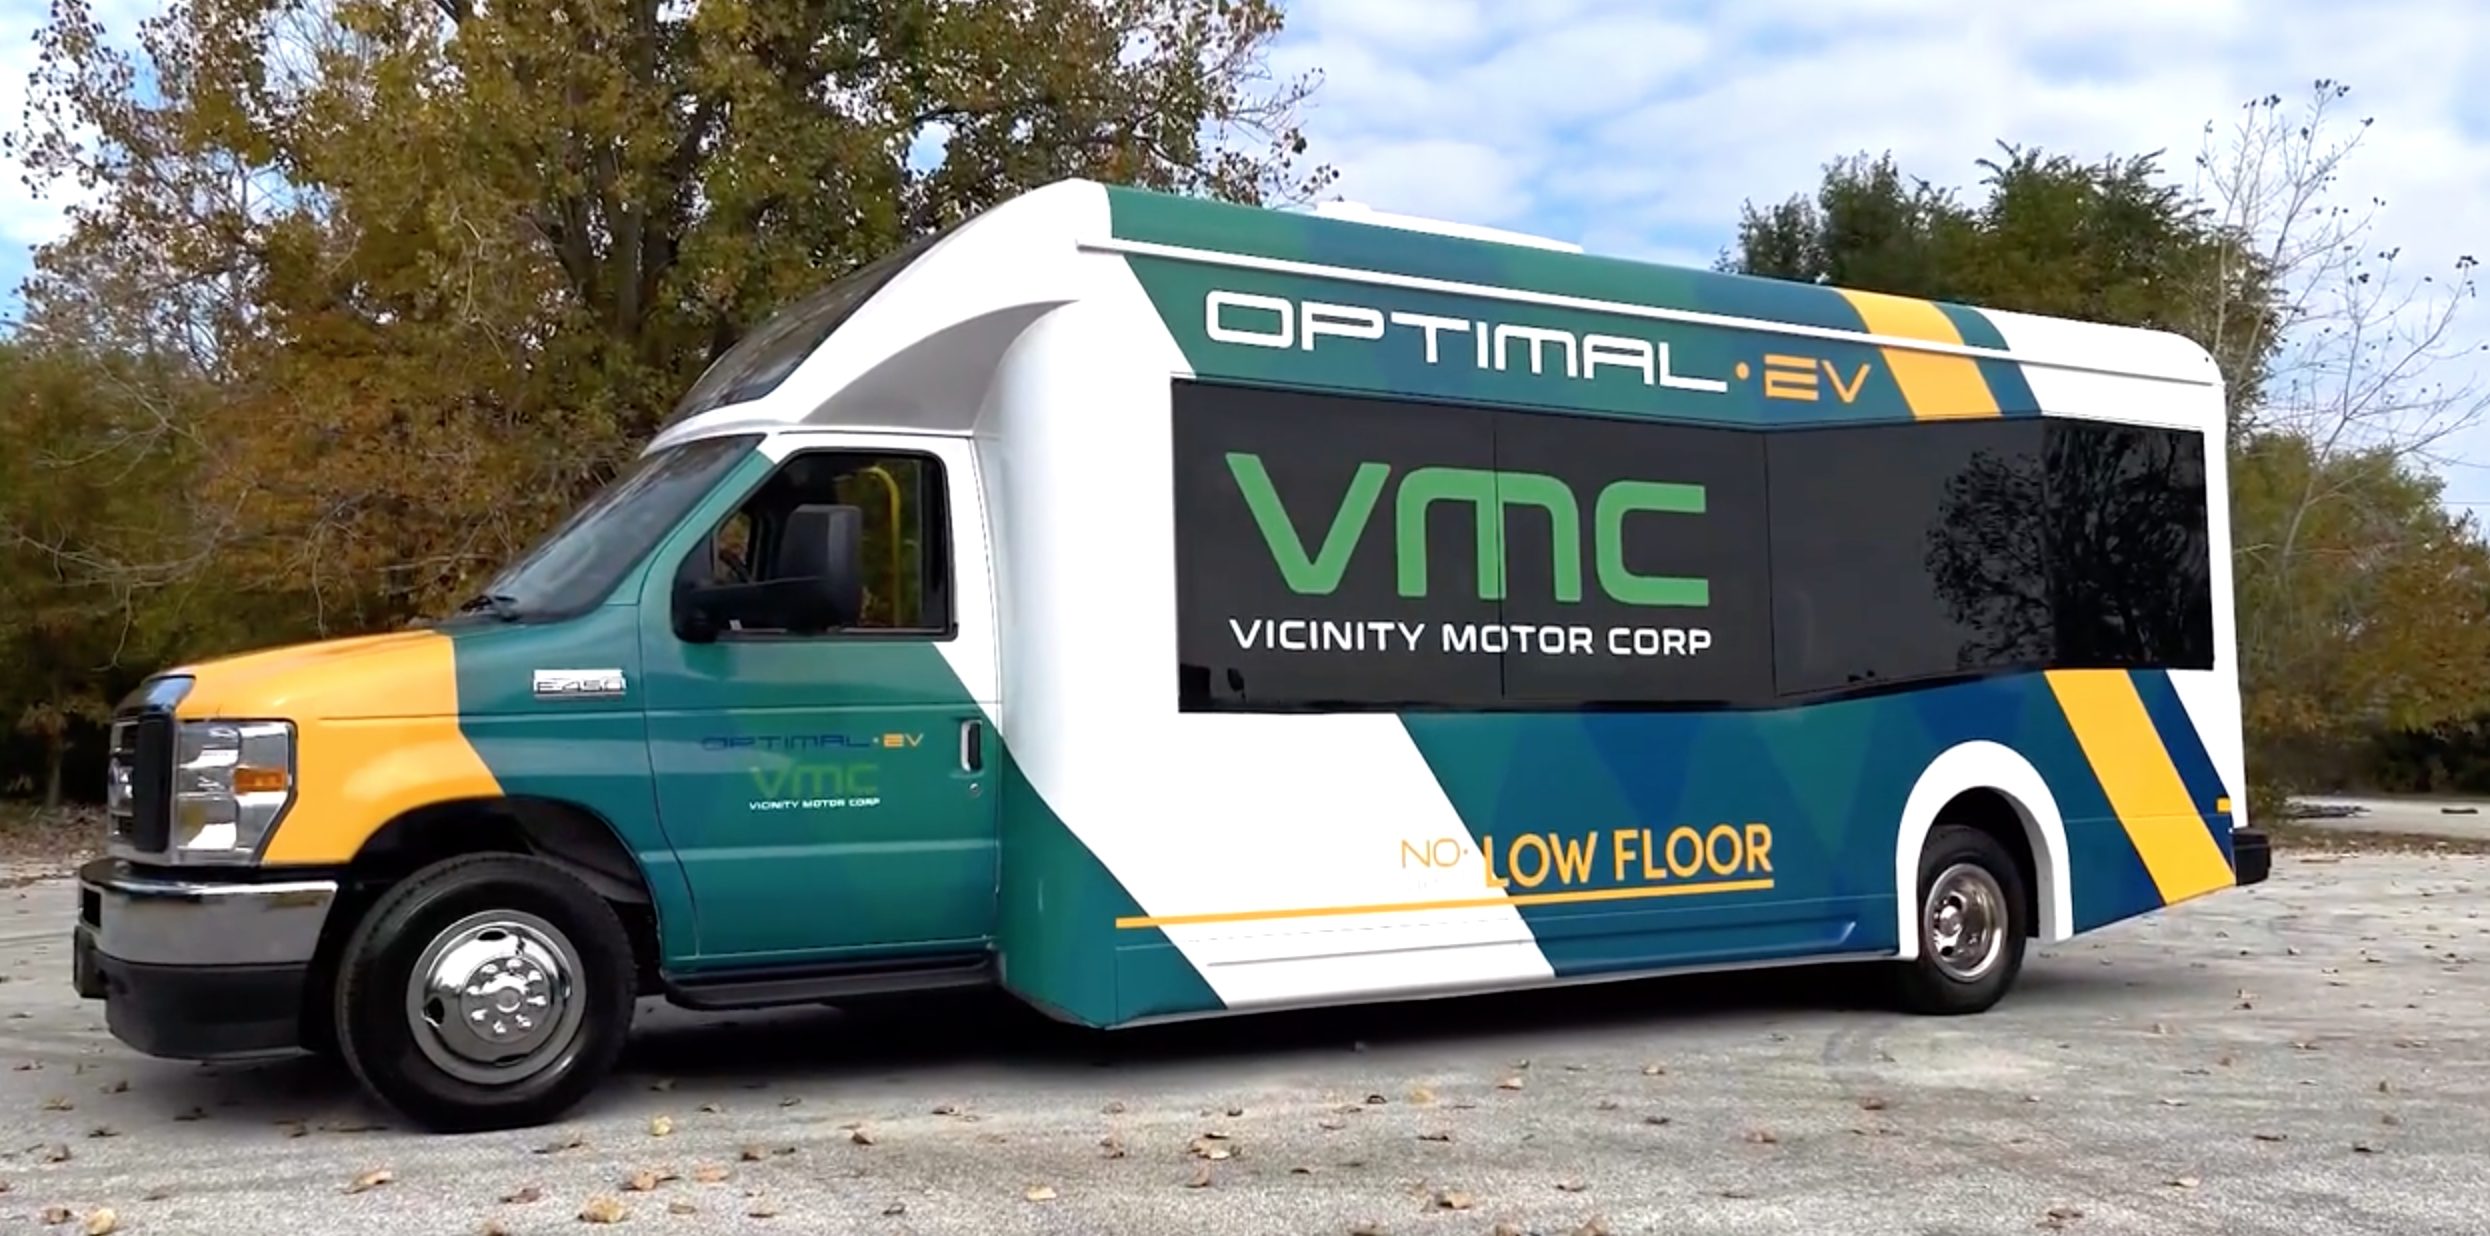 Vicinity Motor Corp bus